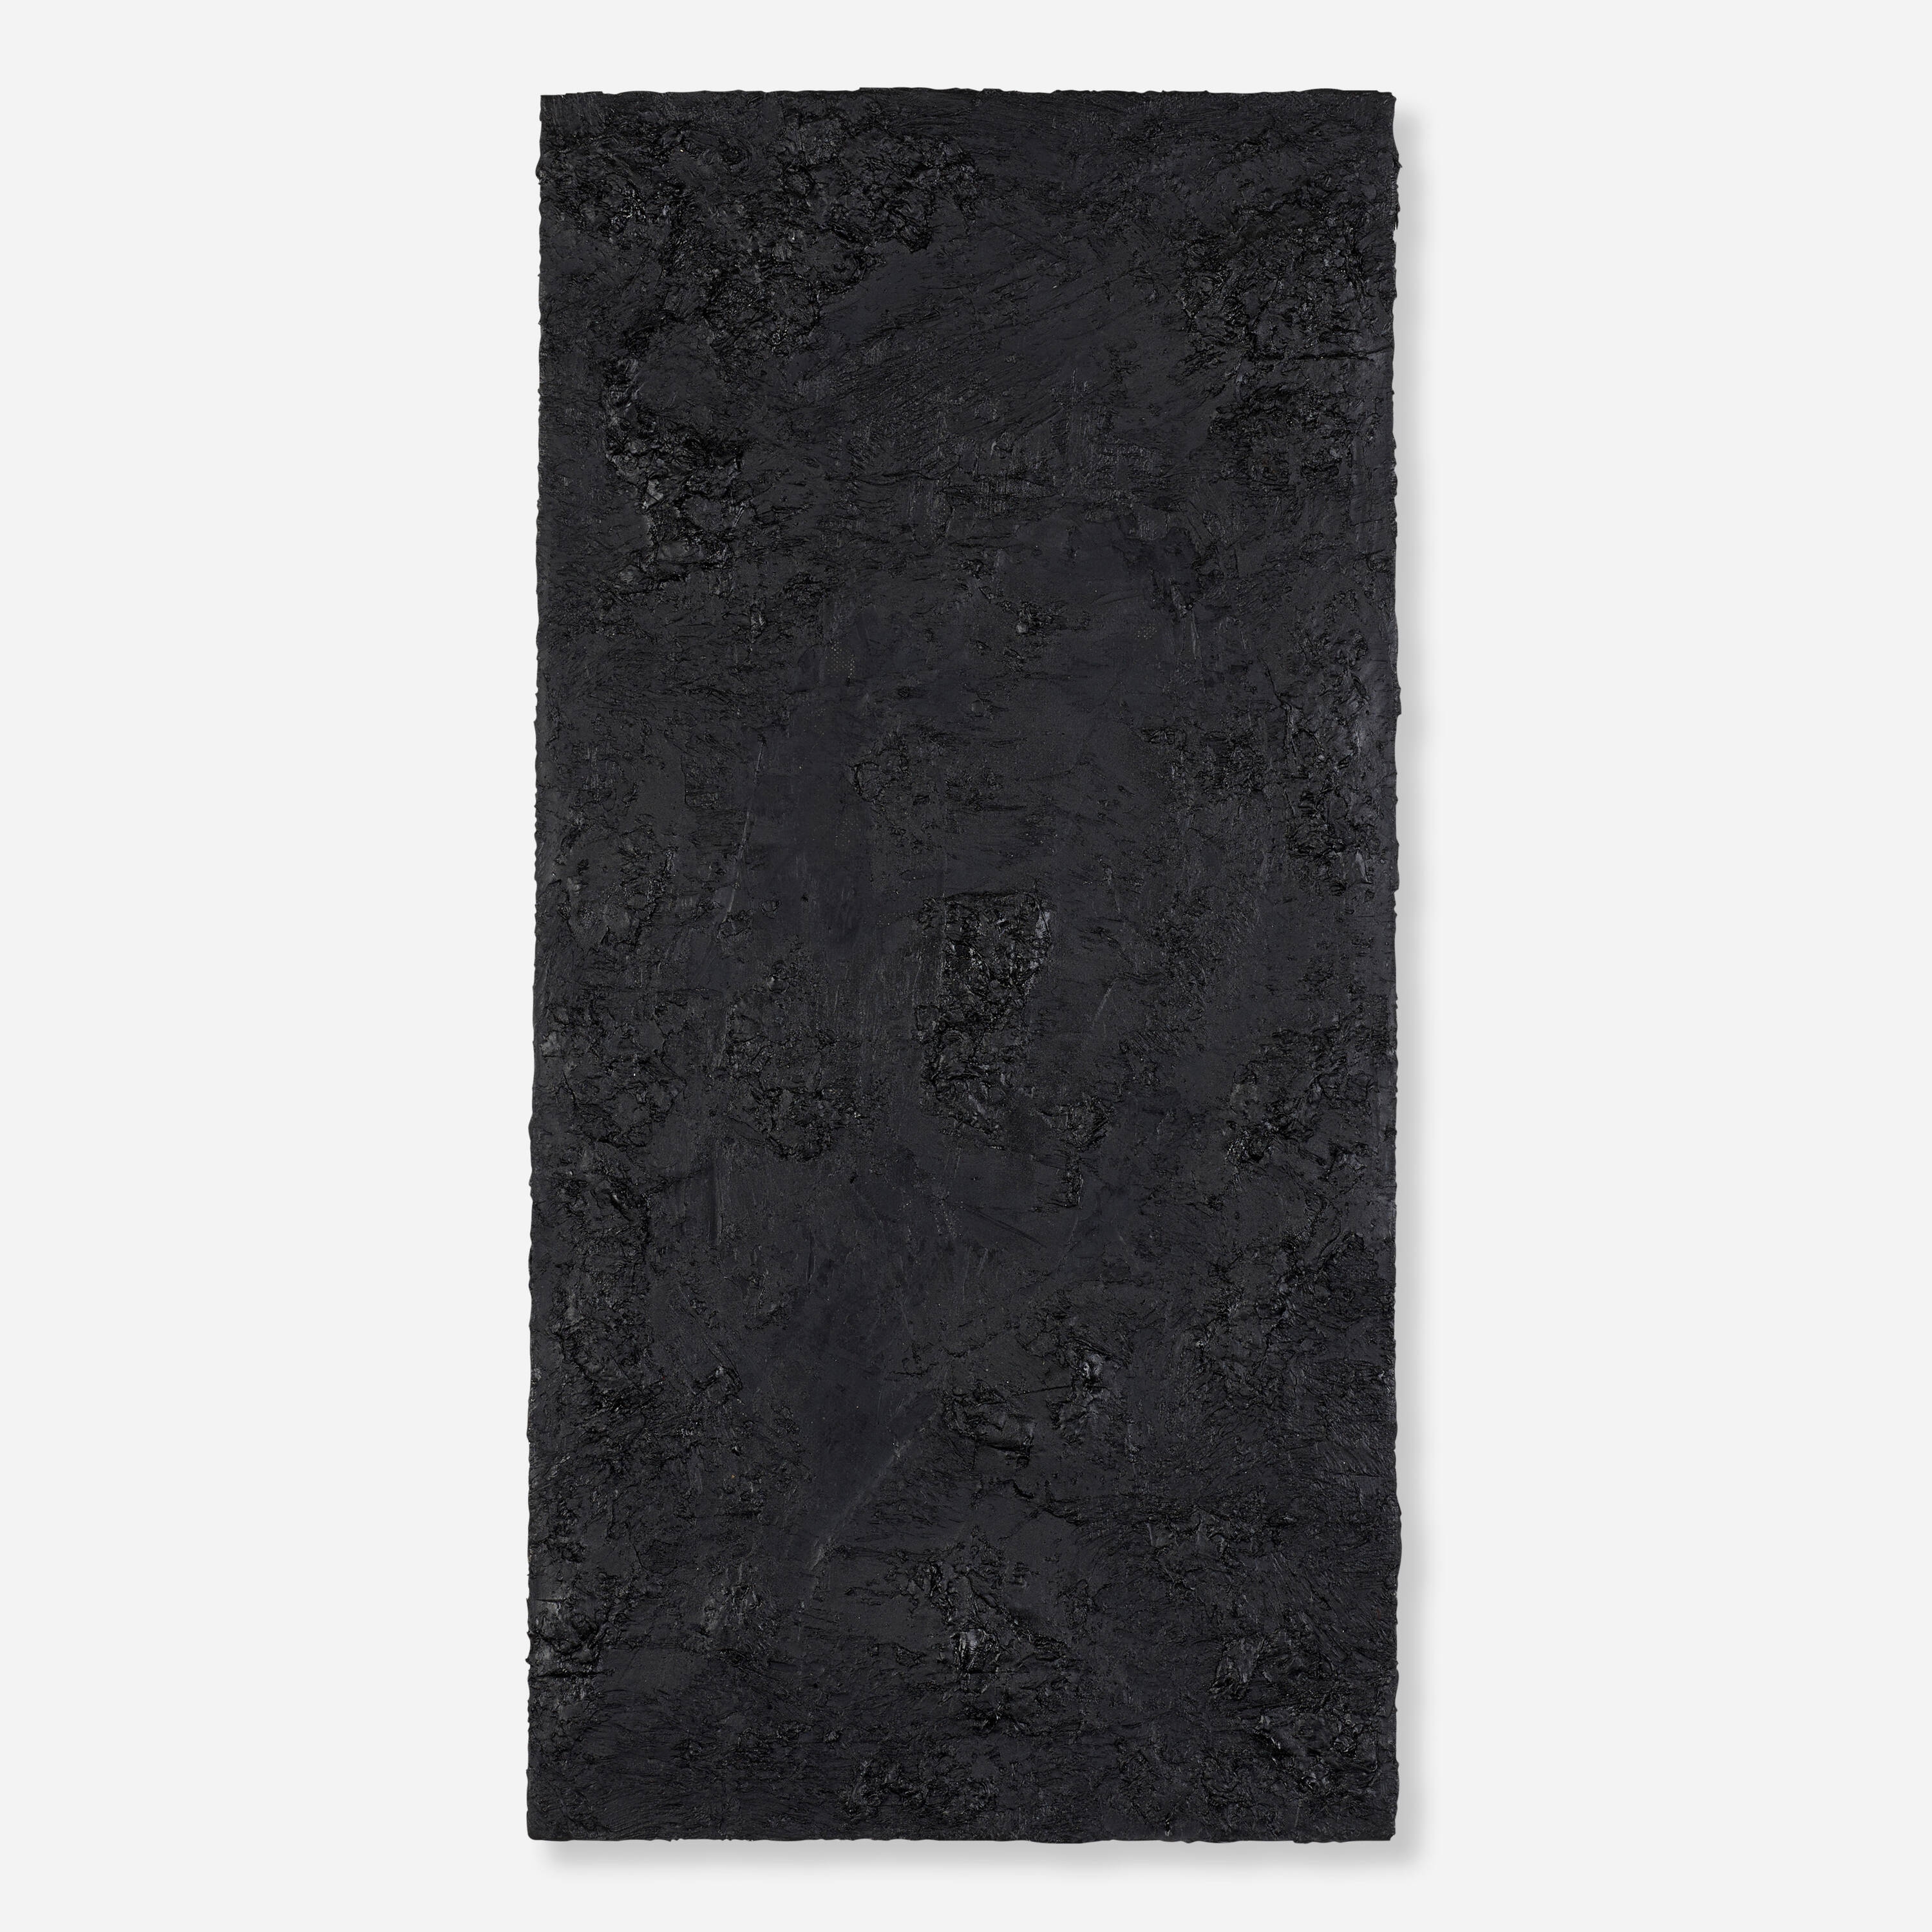 Monochrome Painting Black #2 by Jason Pickleman, 2004